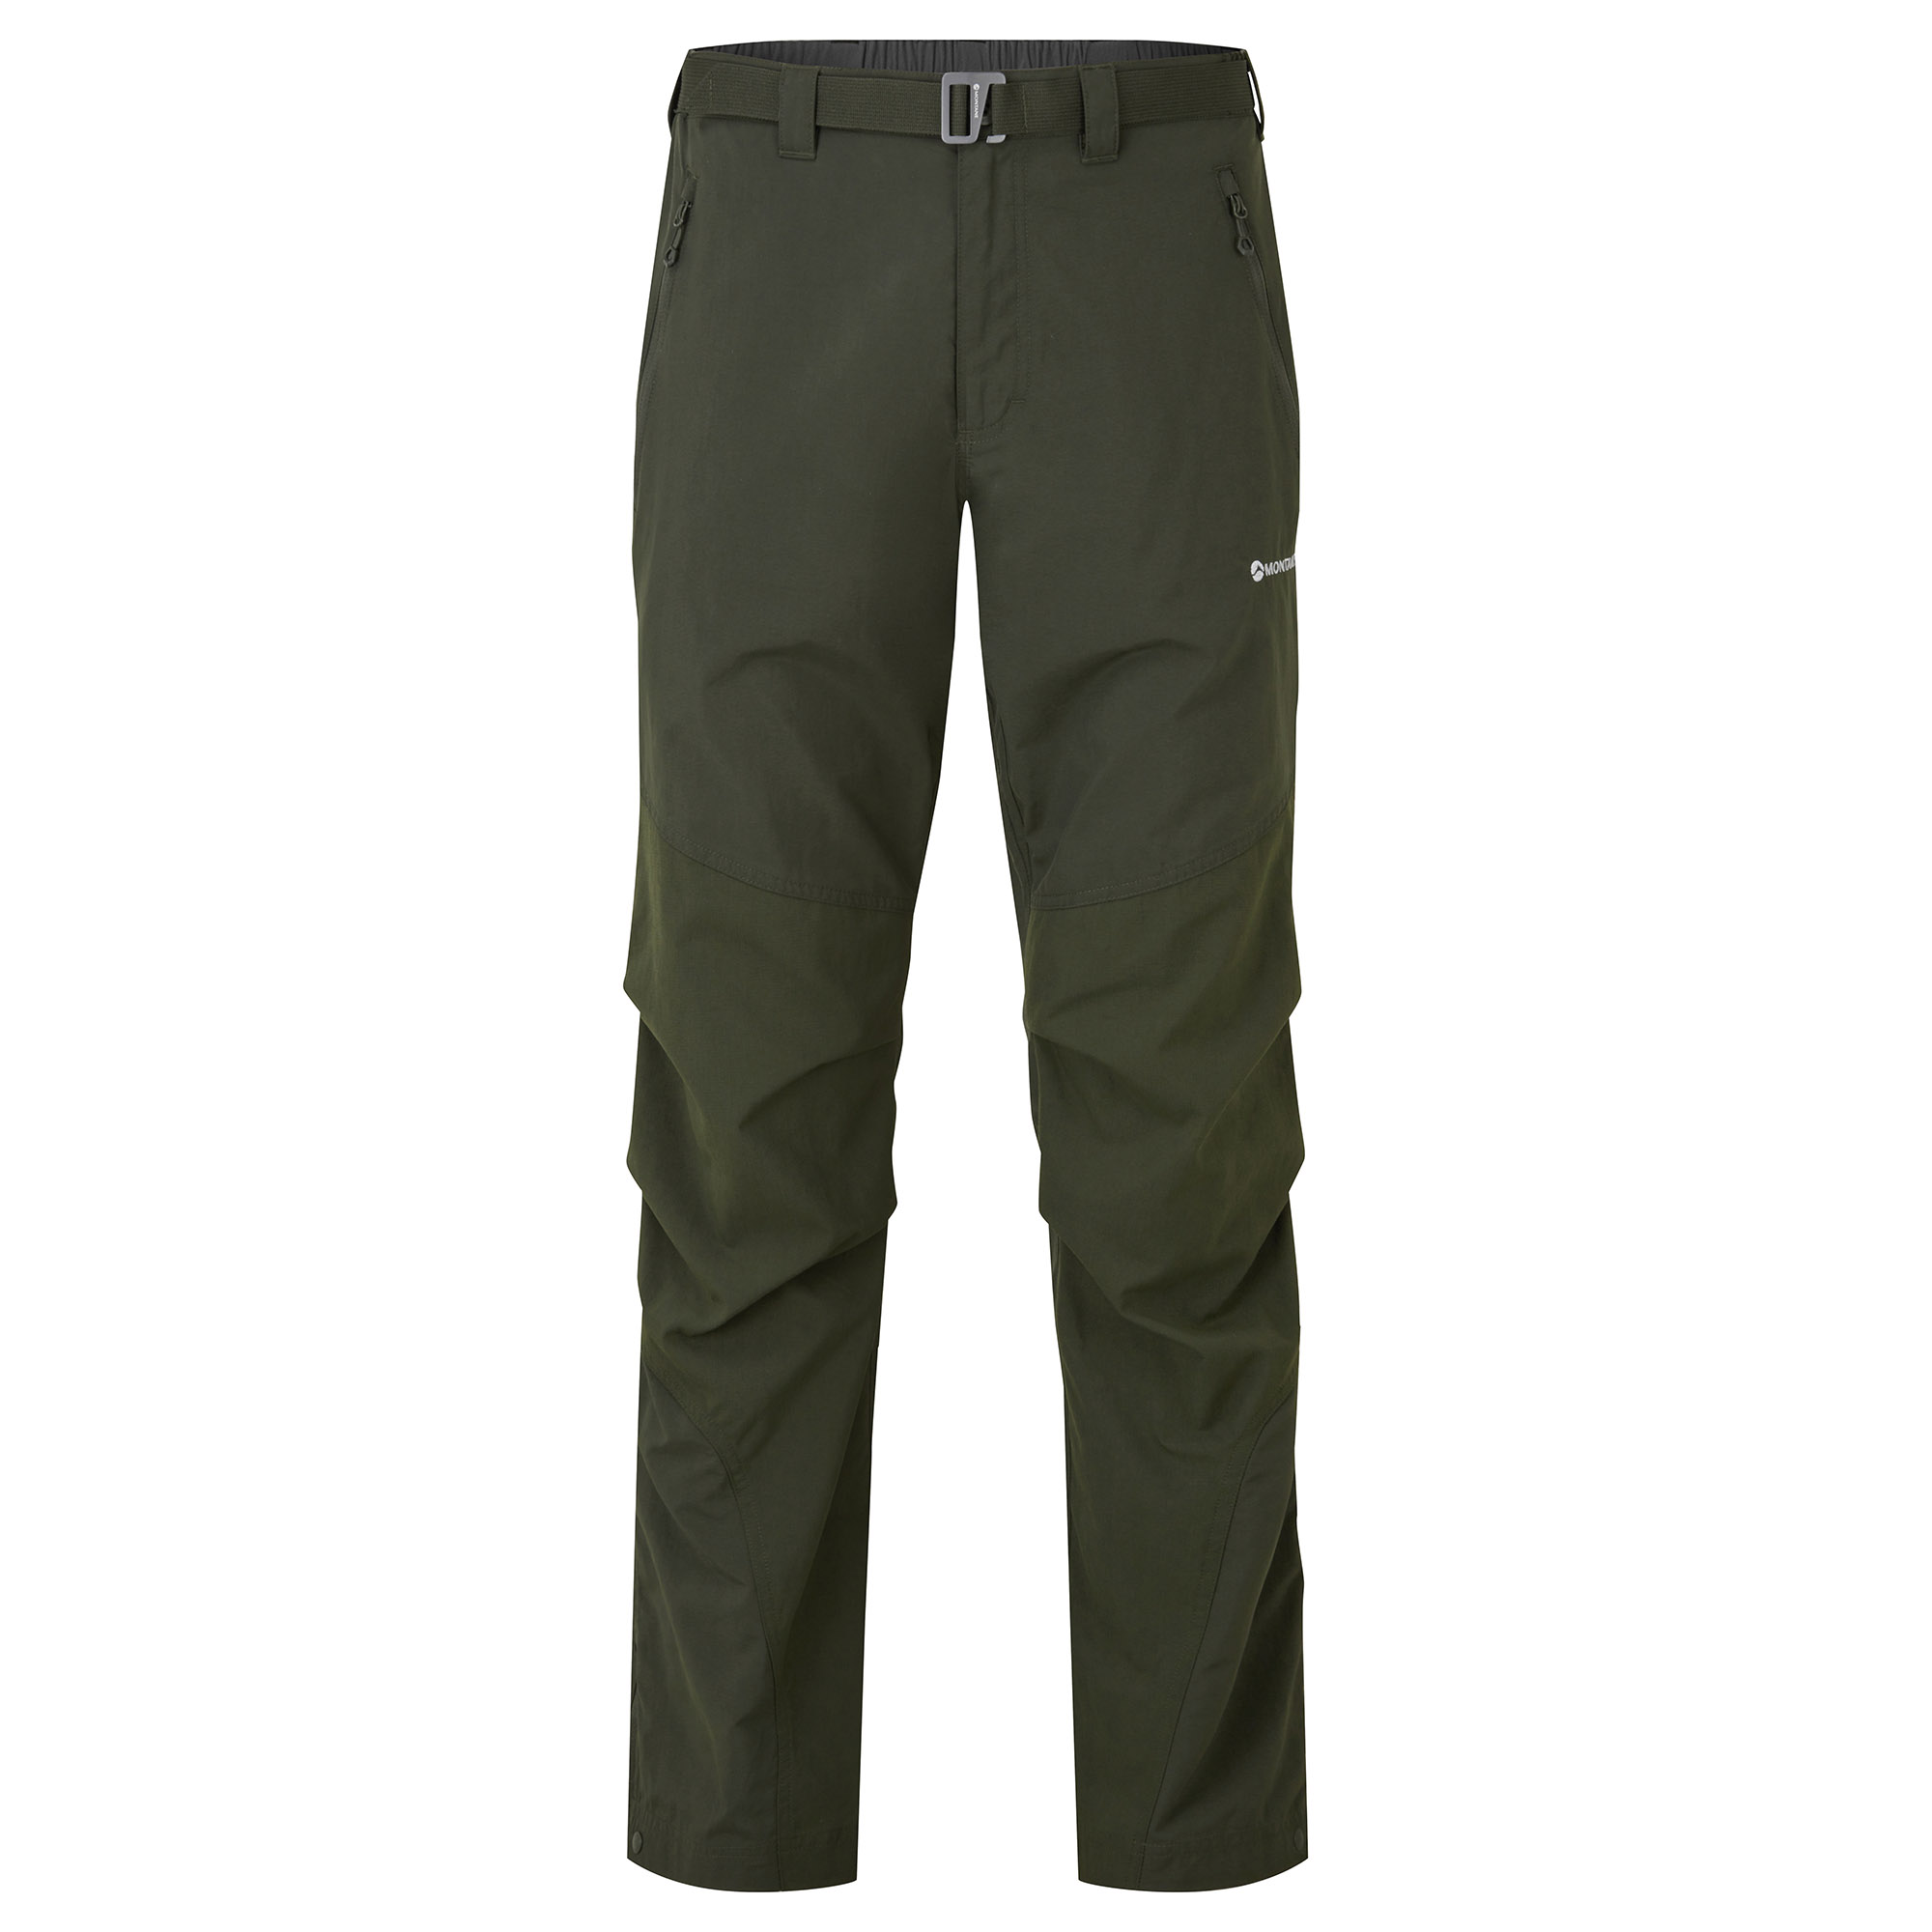 Montane pánské softshellové kalhoty Terra Pants - Běžná Délka Barva: Oak Green, Velikost: 30